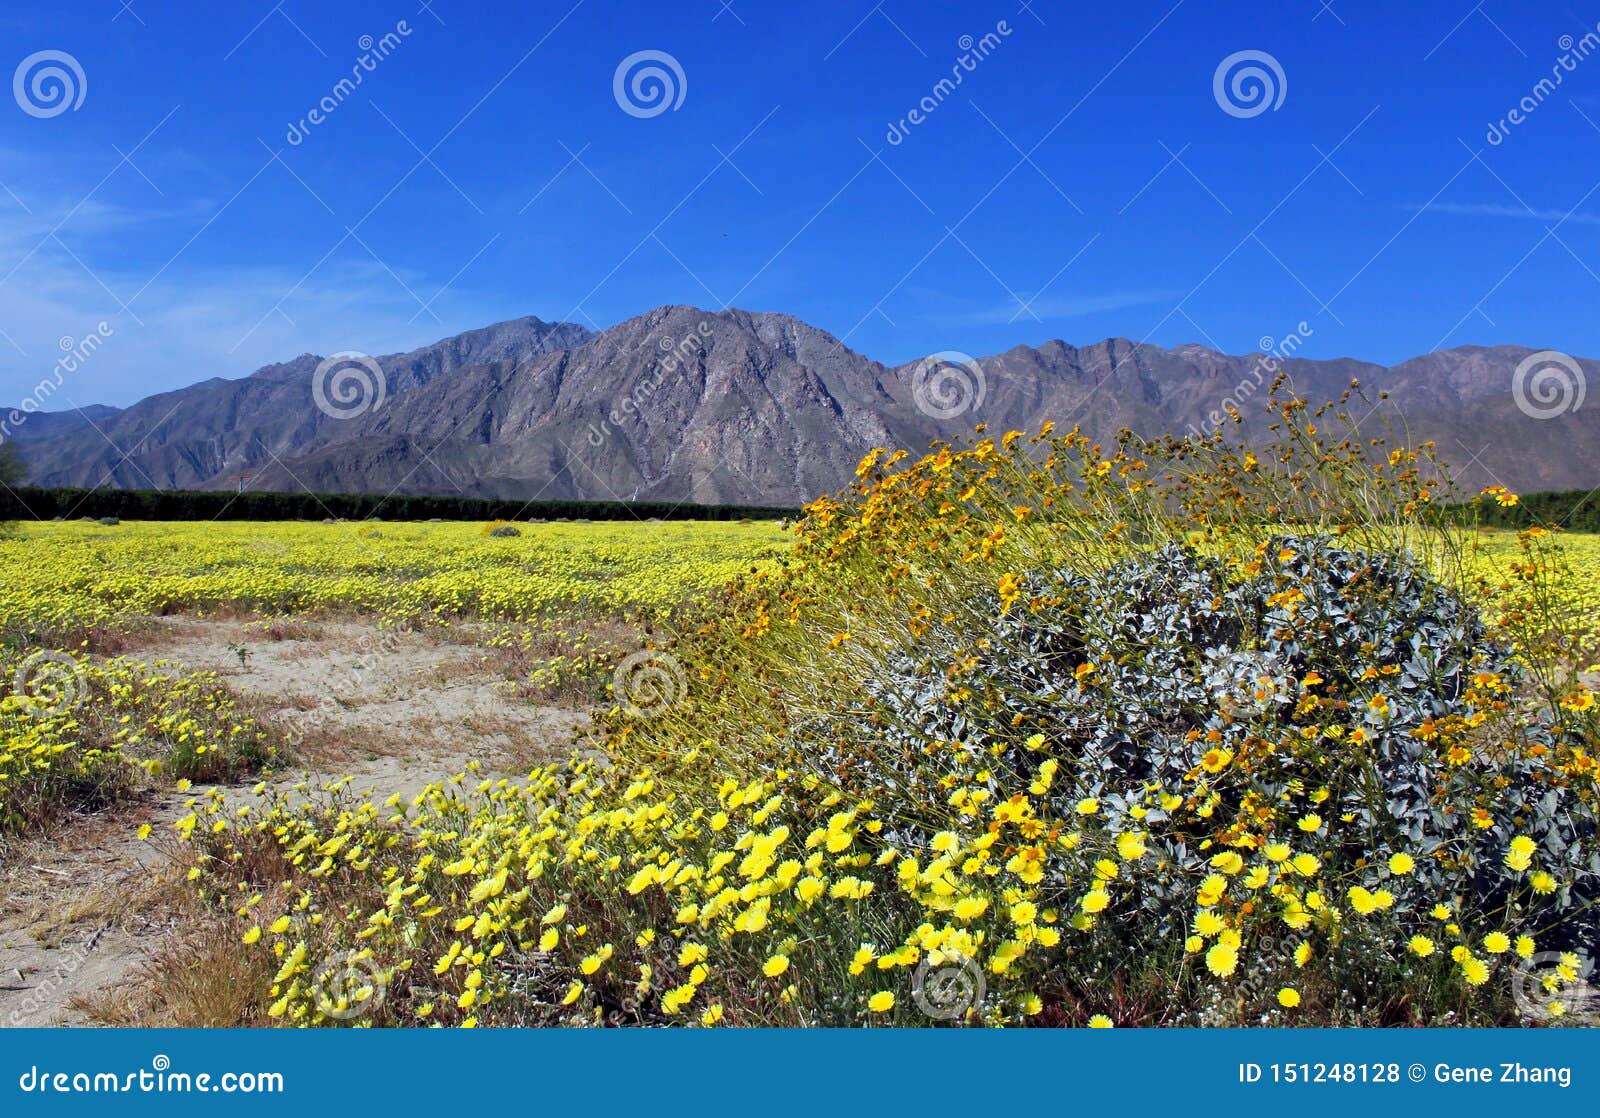 anza borrego desert state park spring landscape with yellow brittlebush flowers